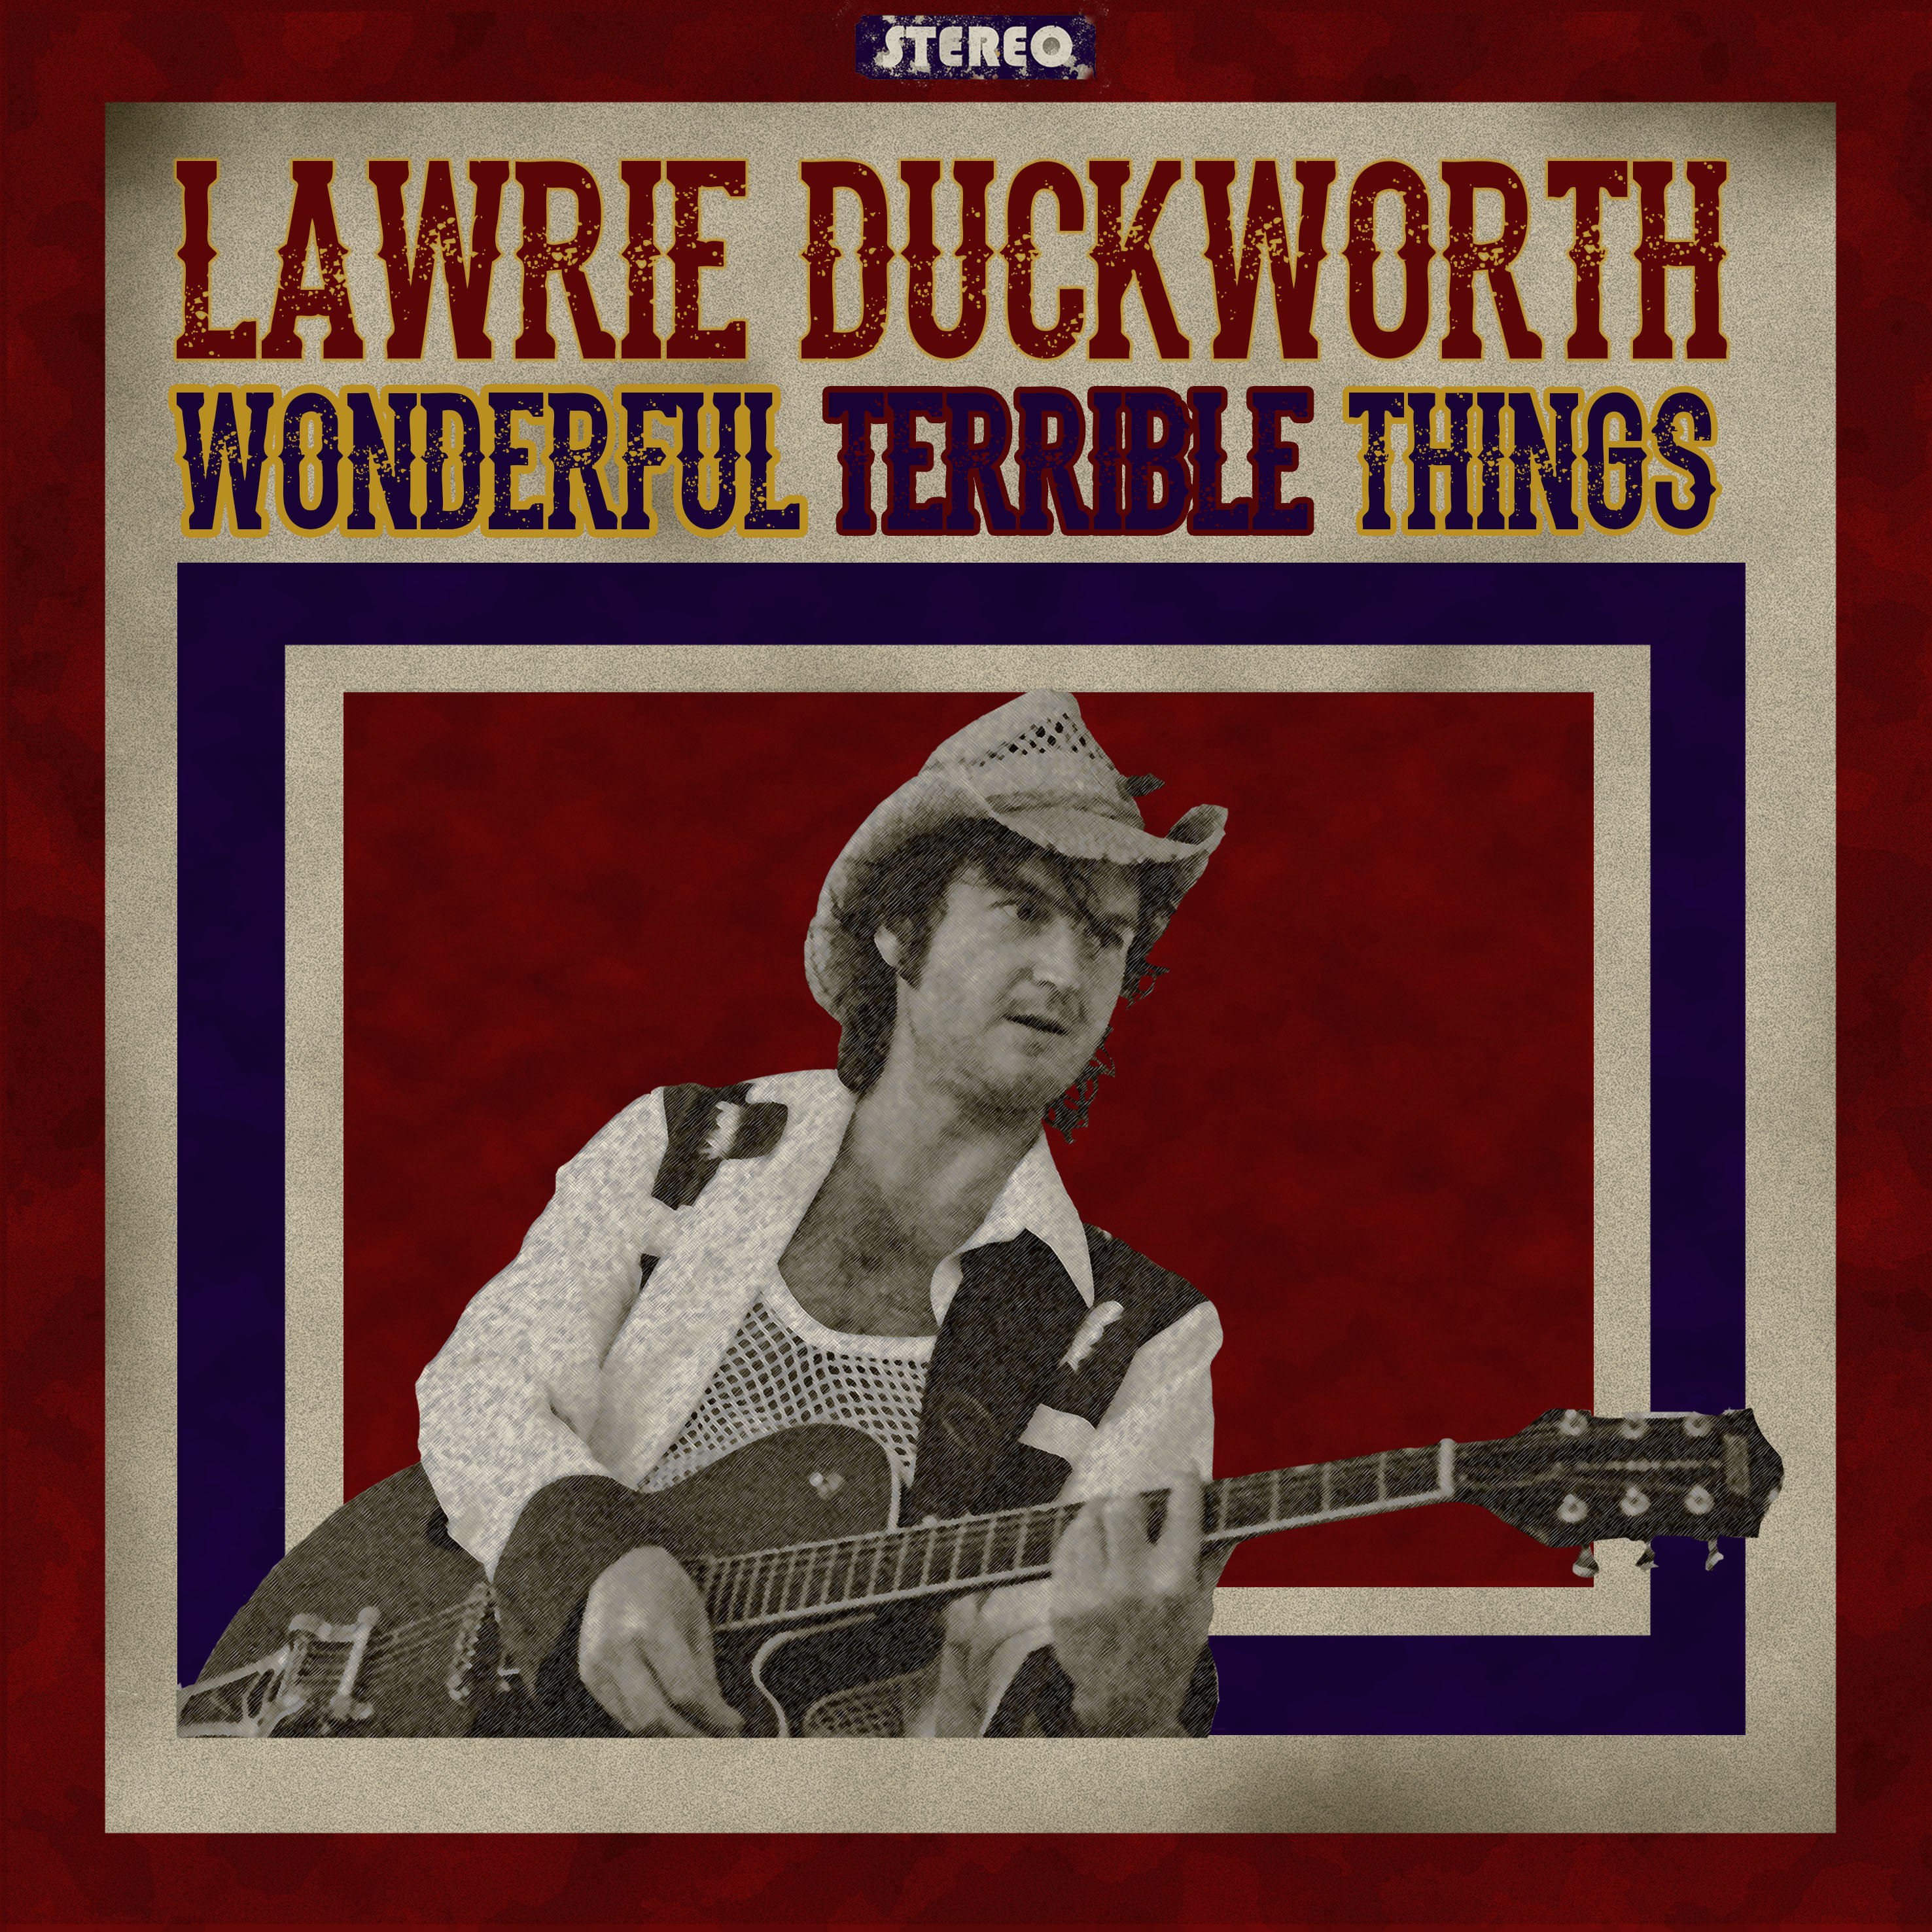 NEW MUSIC: Lawrie Duckworth – The Devil In Me